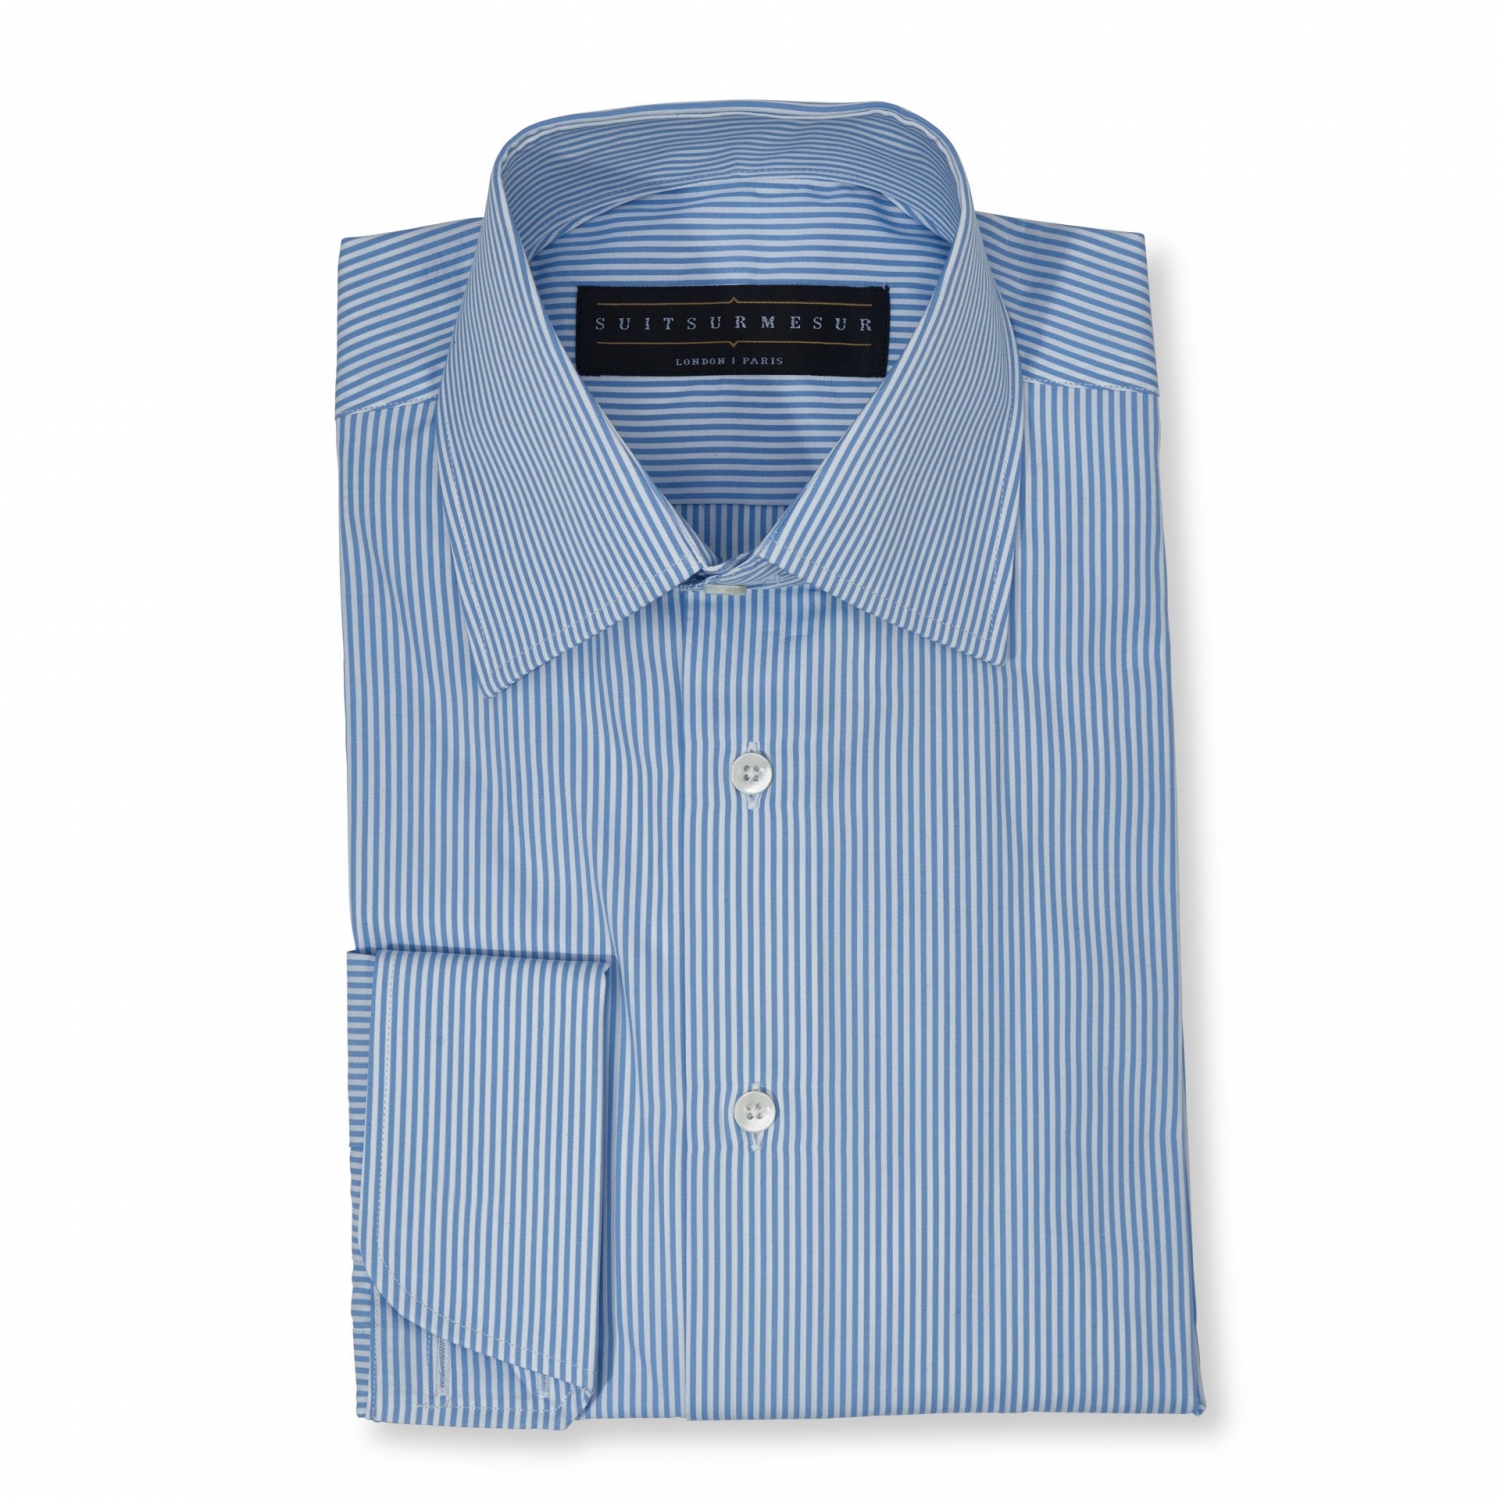 Light blue bengal stripe (half Italian collar) Poplin shirt – 100% cotton Thomas Mason fabric